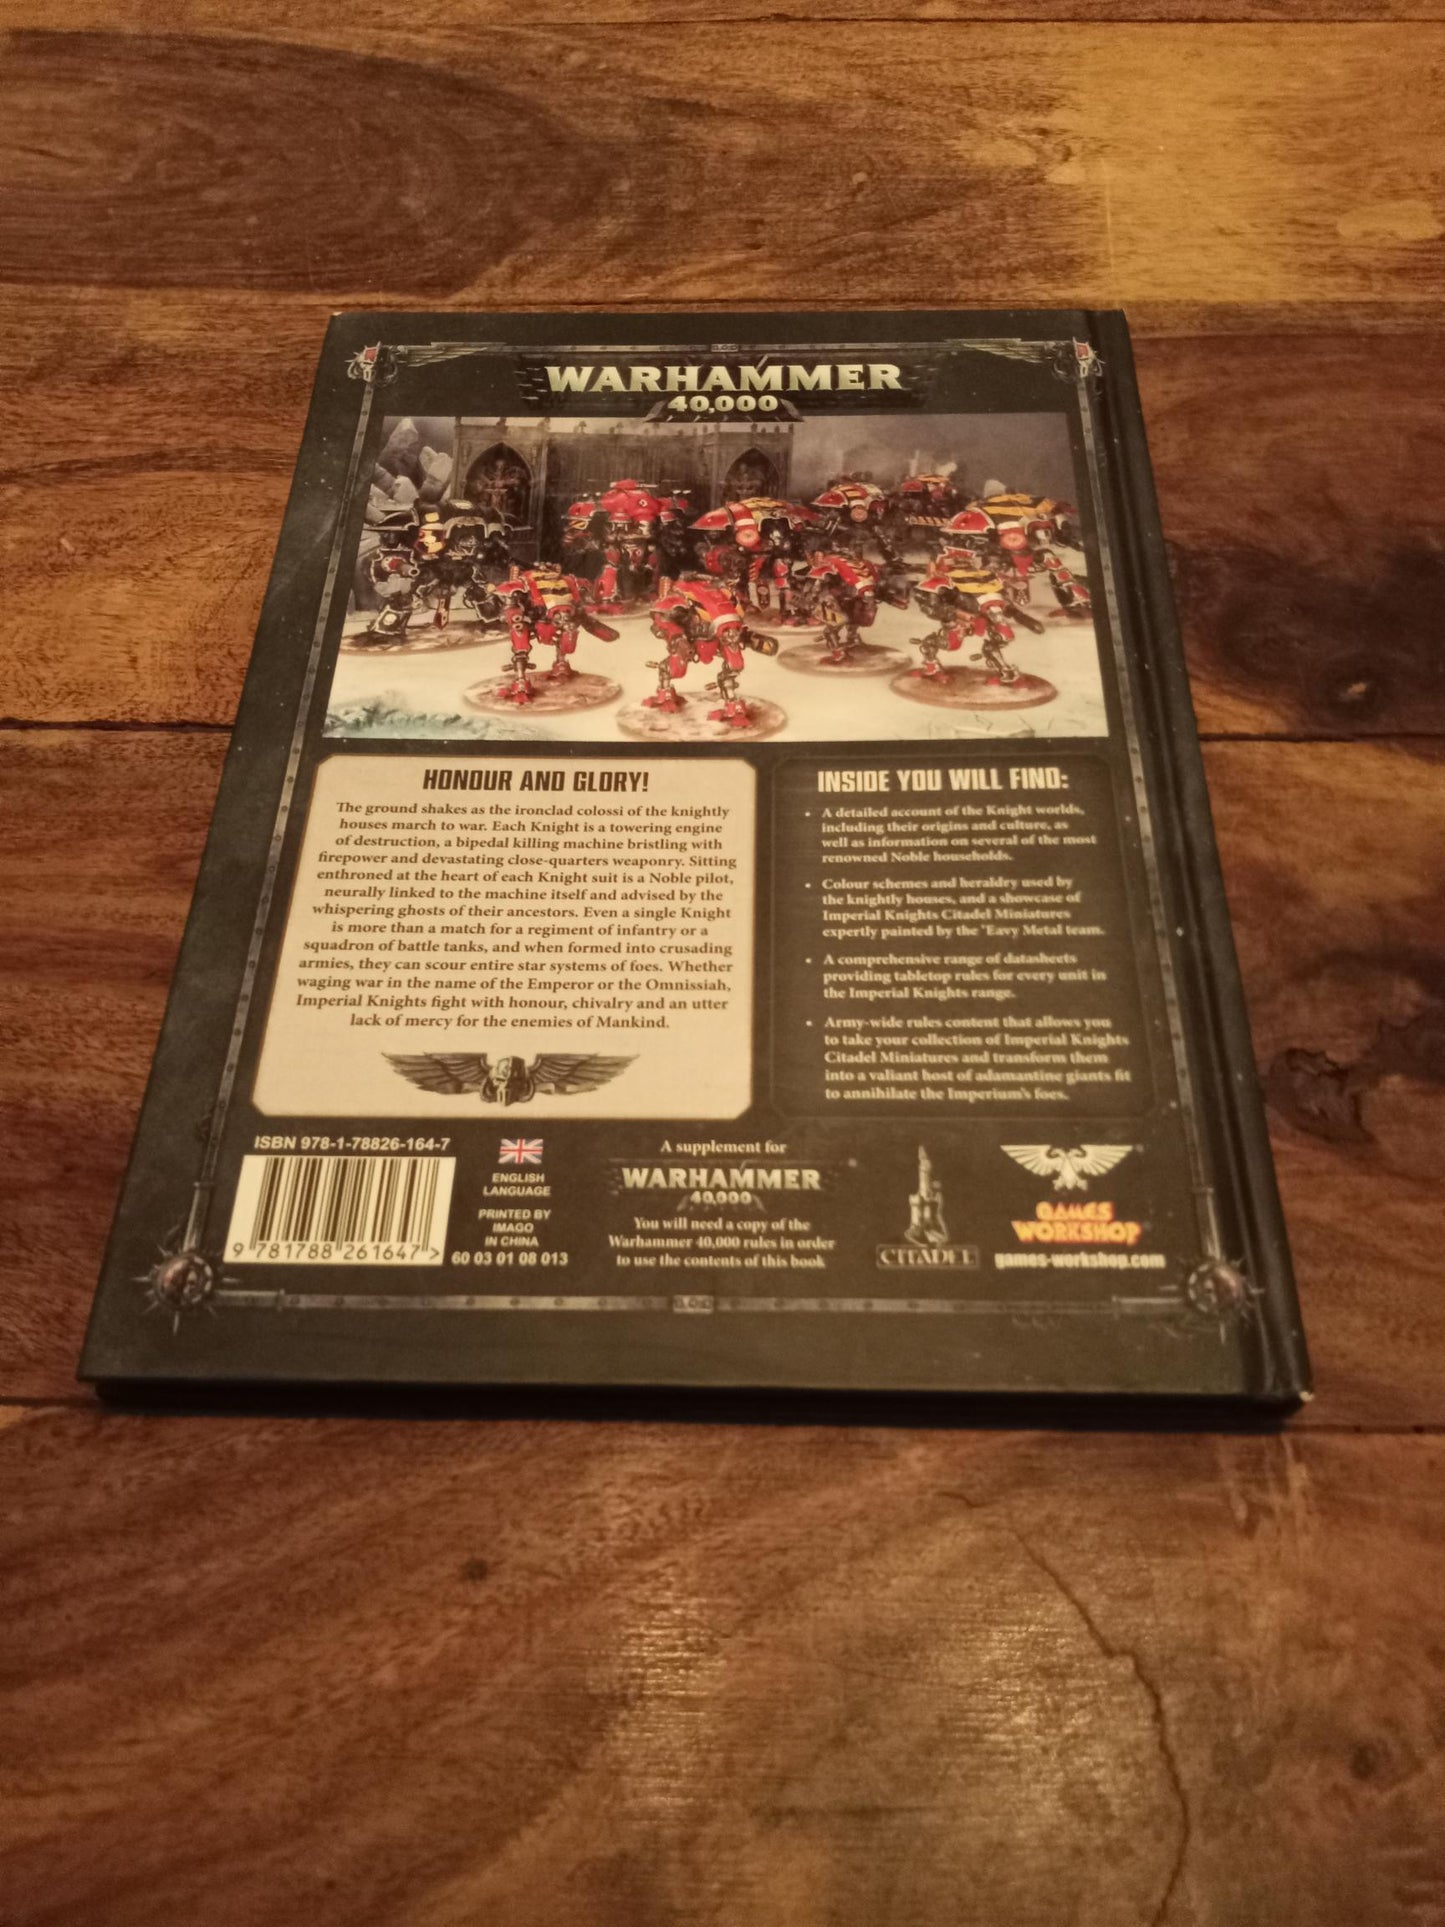 Warhammer 40K Codex Imperial Knights 8th Edition Hardcover Games Workshop 2018